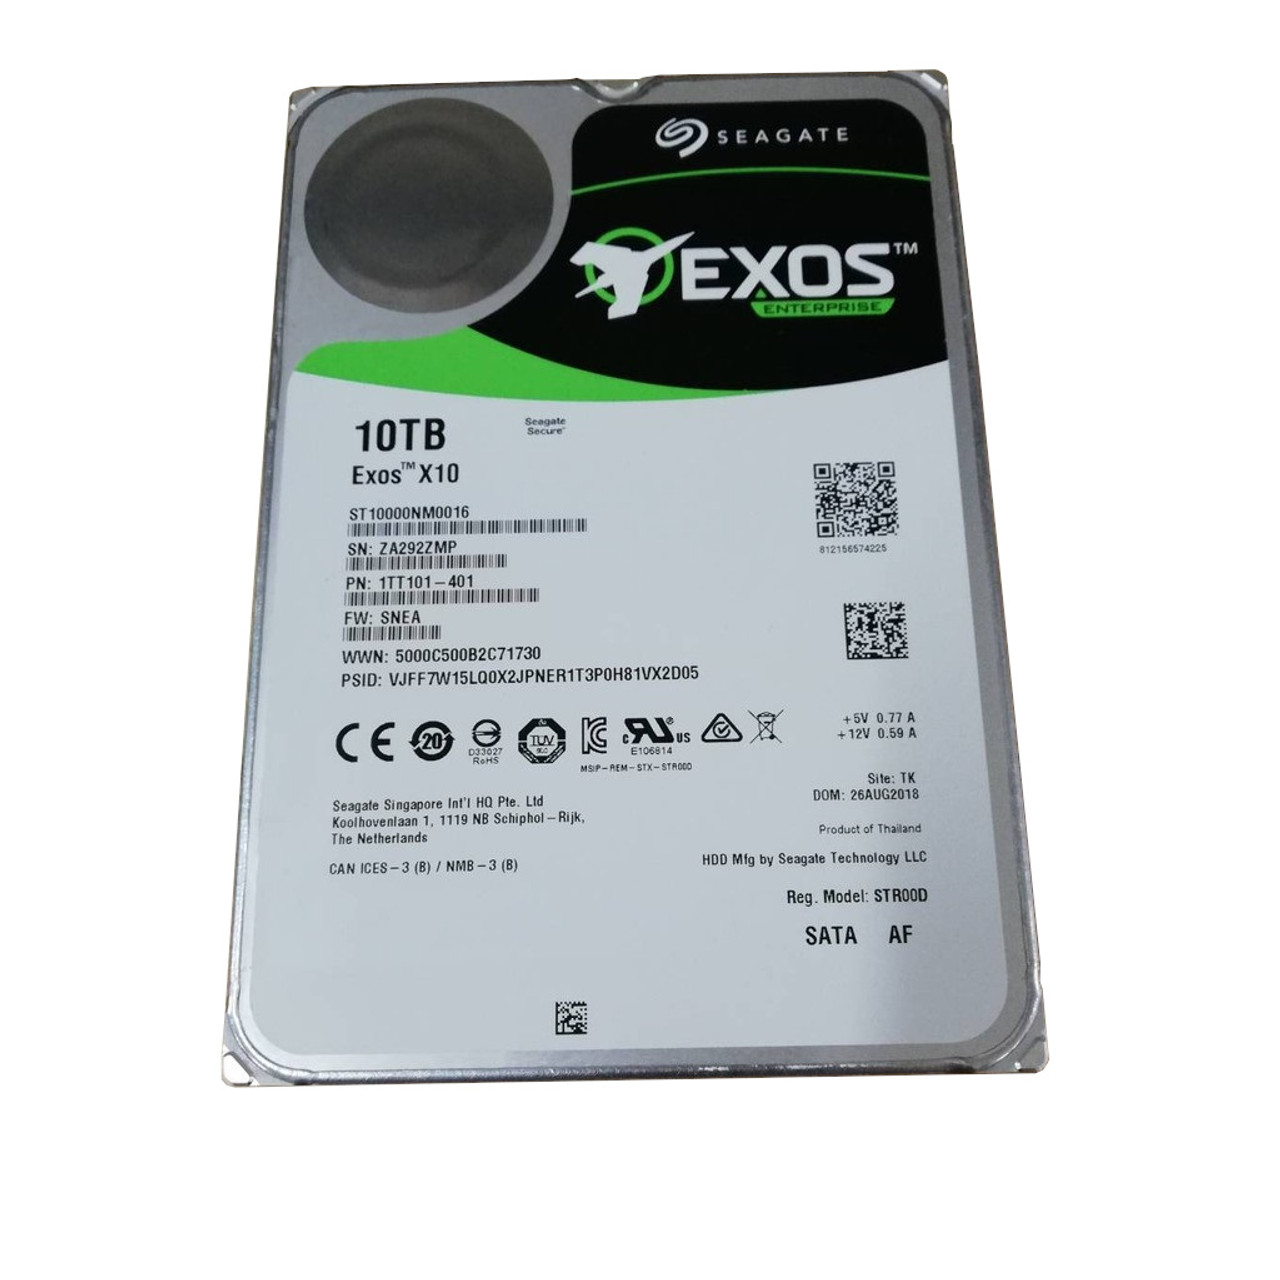 ST10000NM0016 Seagate Exos X10 10TB 7.2K SATA 6G Hard Drive